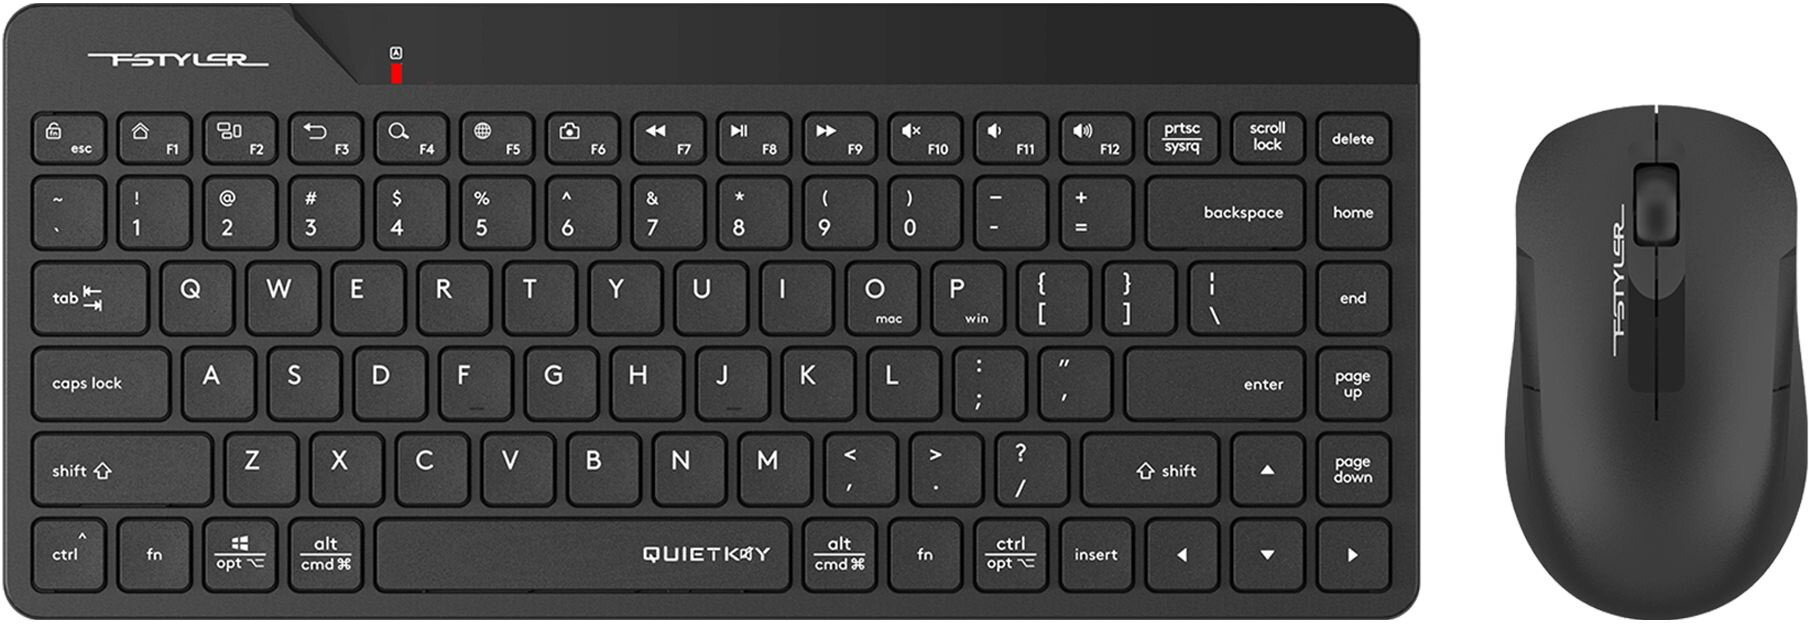 Клавиатура + мышь A4Tech Fstyler FG2200 Air клав: черный мышь: черный USB беспроводная slim (FG2200 AIR BLACK)